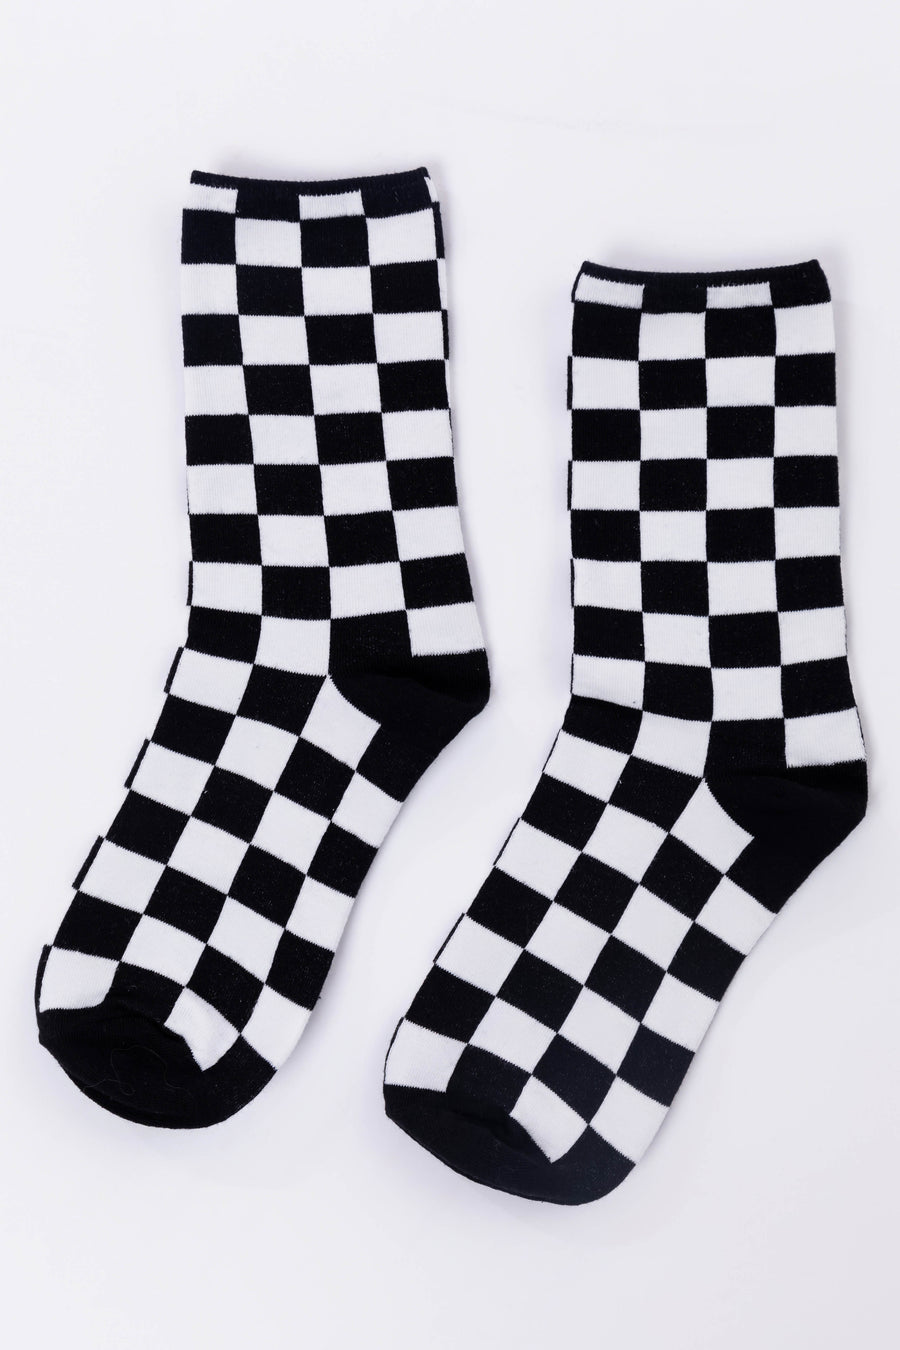 Black and White Checkered Crew Socks